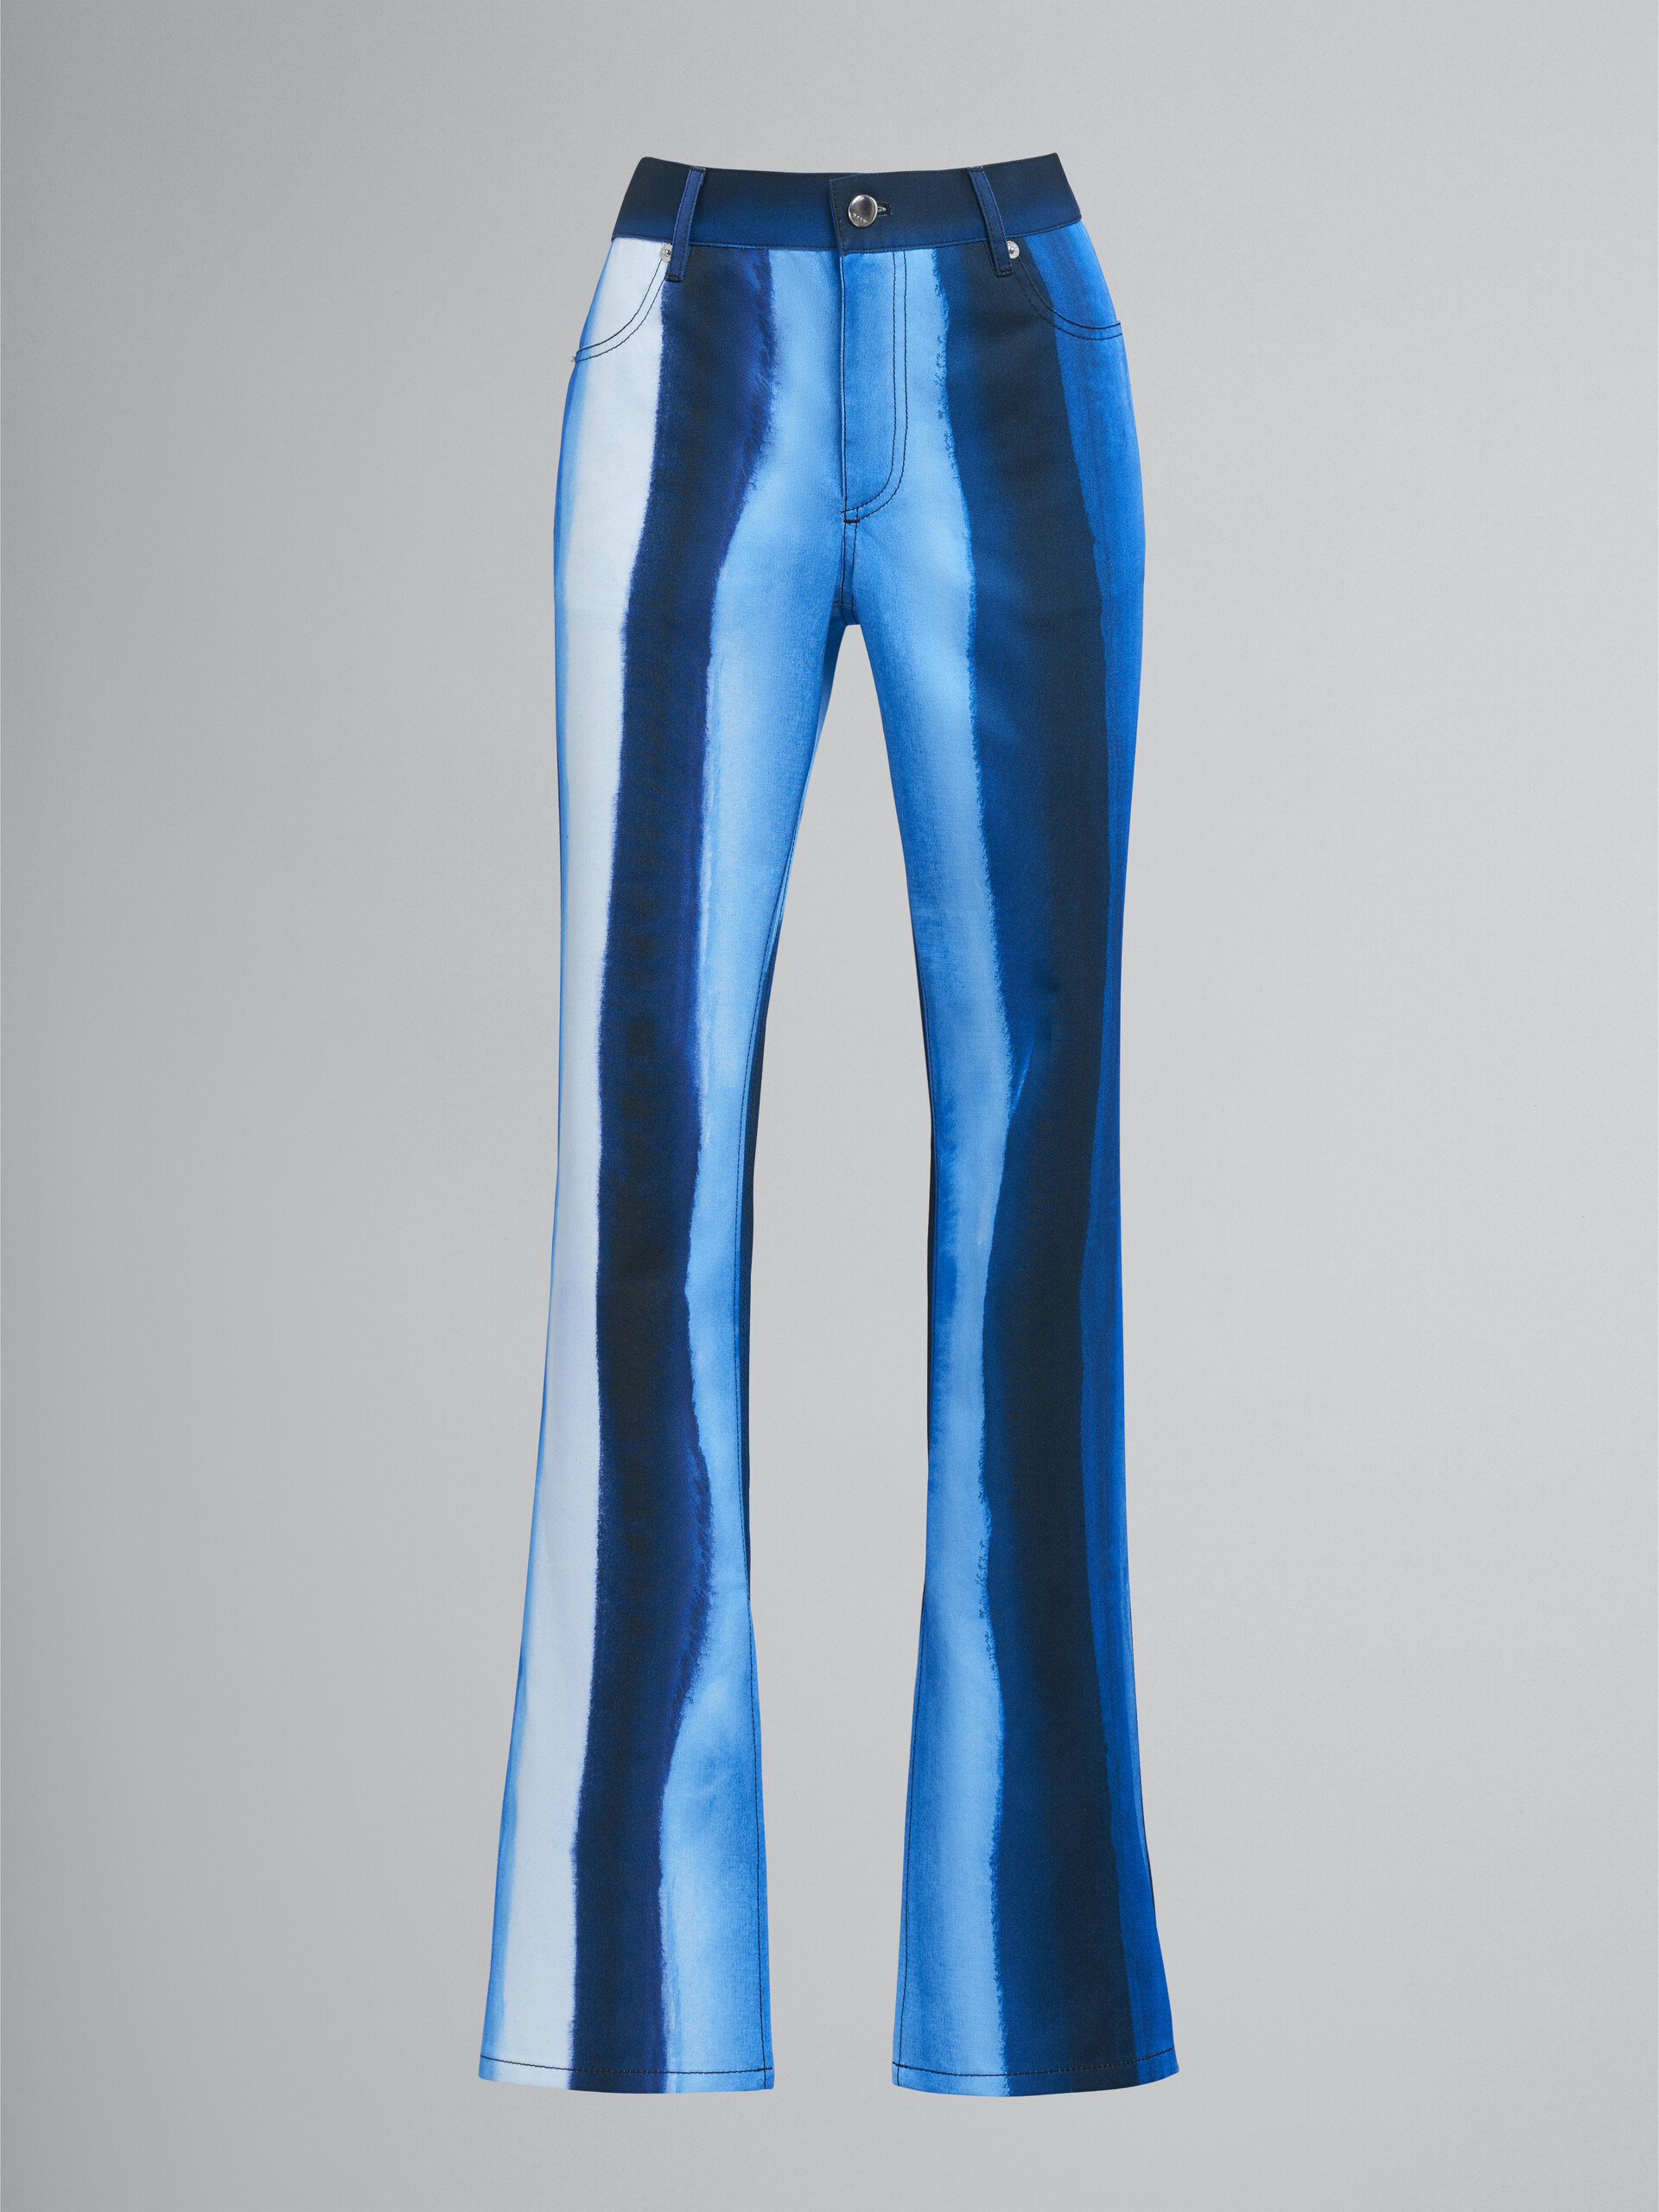 Waterfall Stripe print cotton drill pants - Pants - Image 1